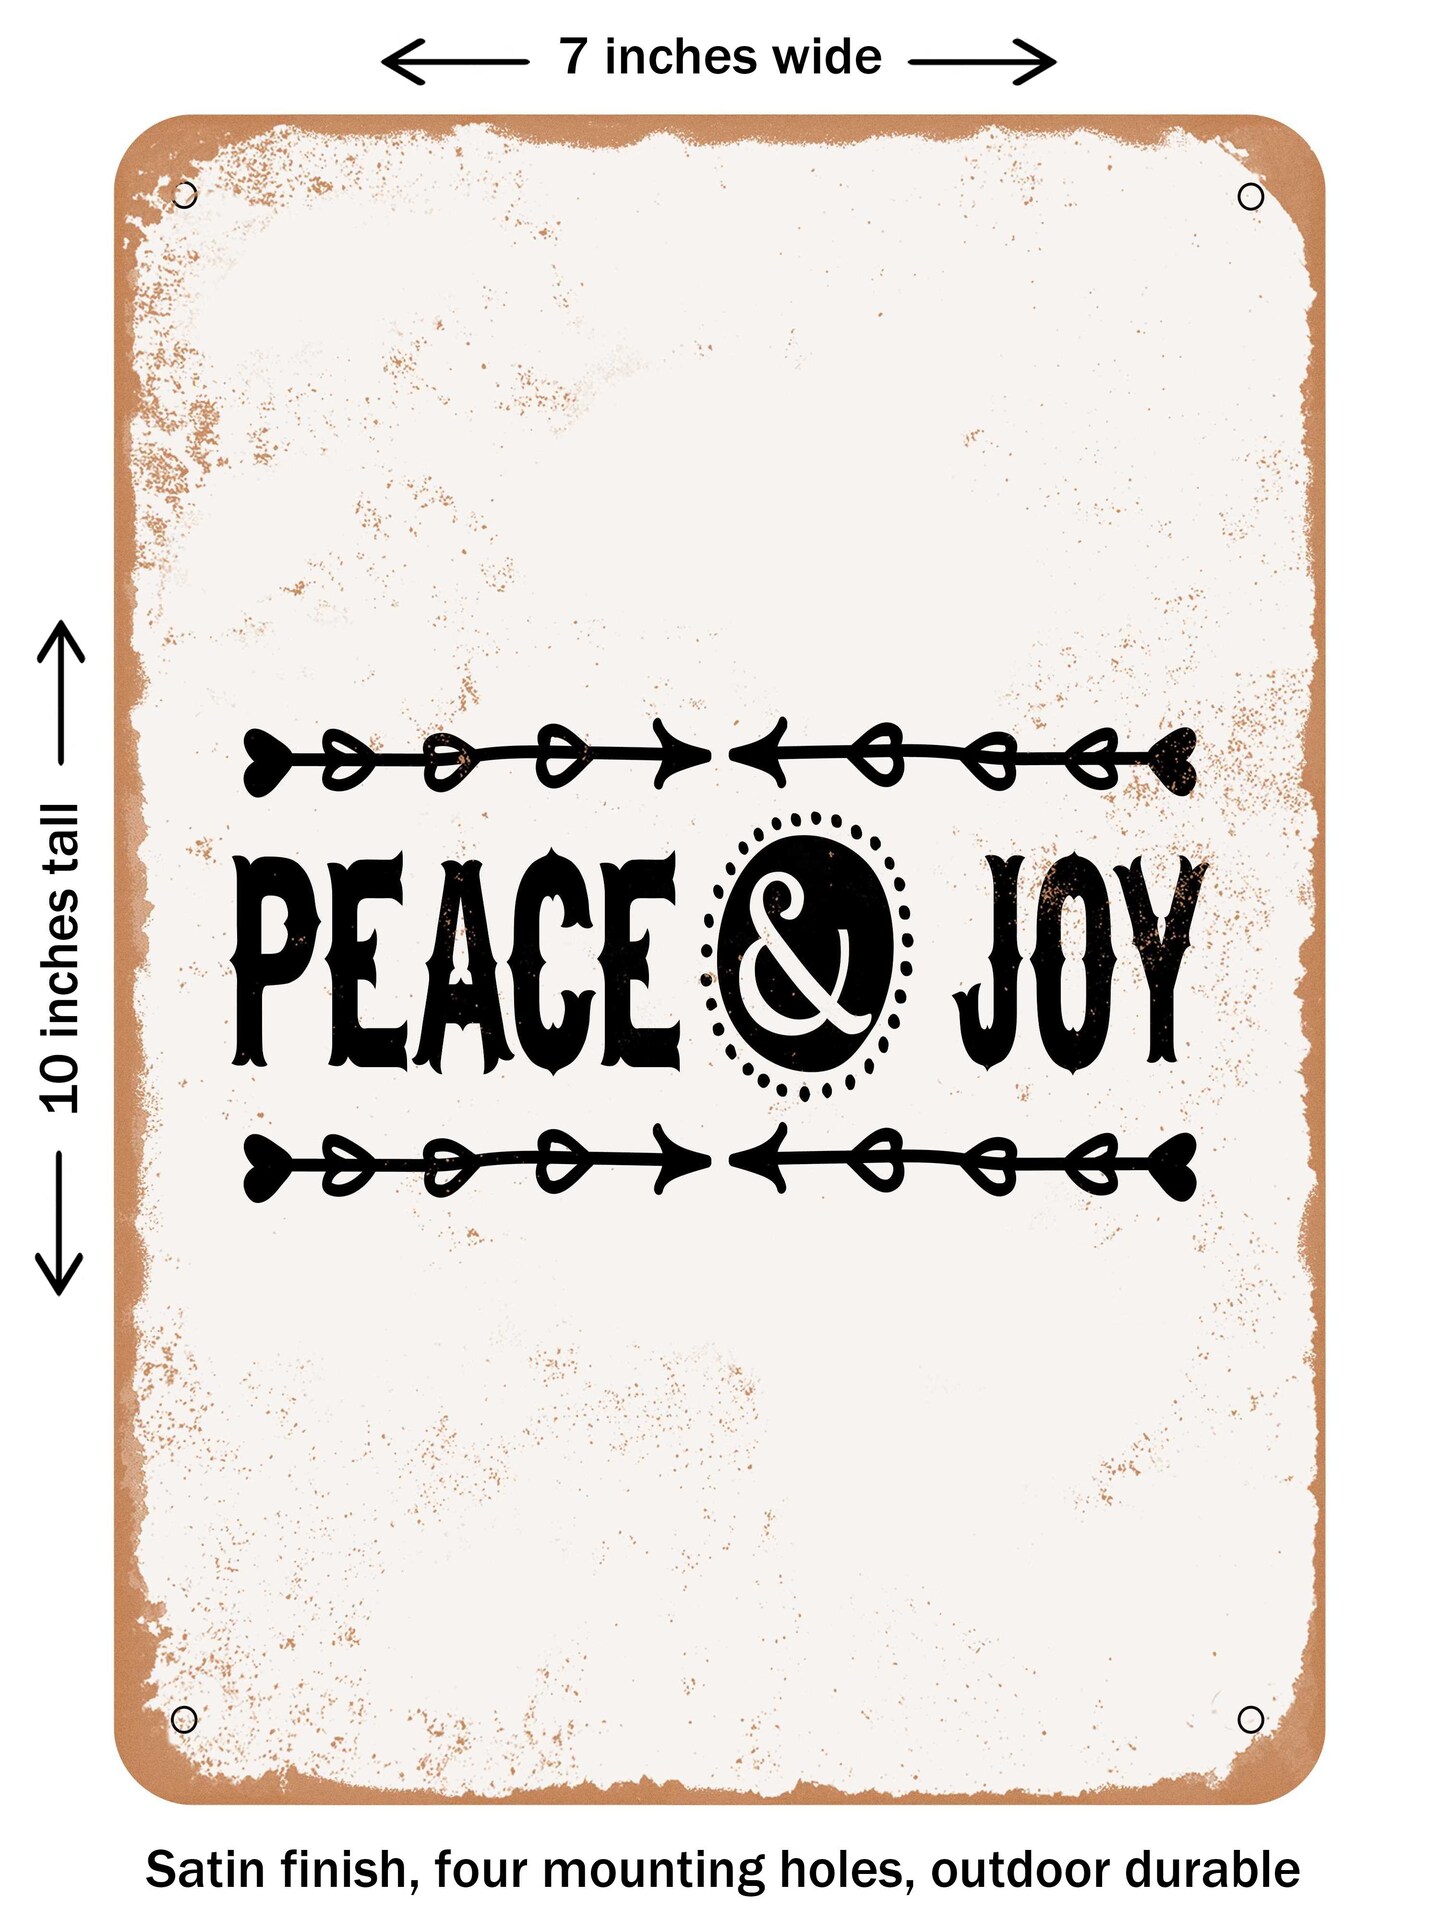 DECORATIVE METAL SIGN - Peace and Joy - 2  - Vintage Rusty Look